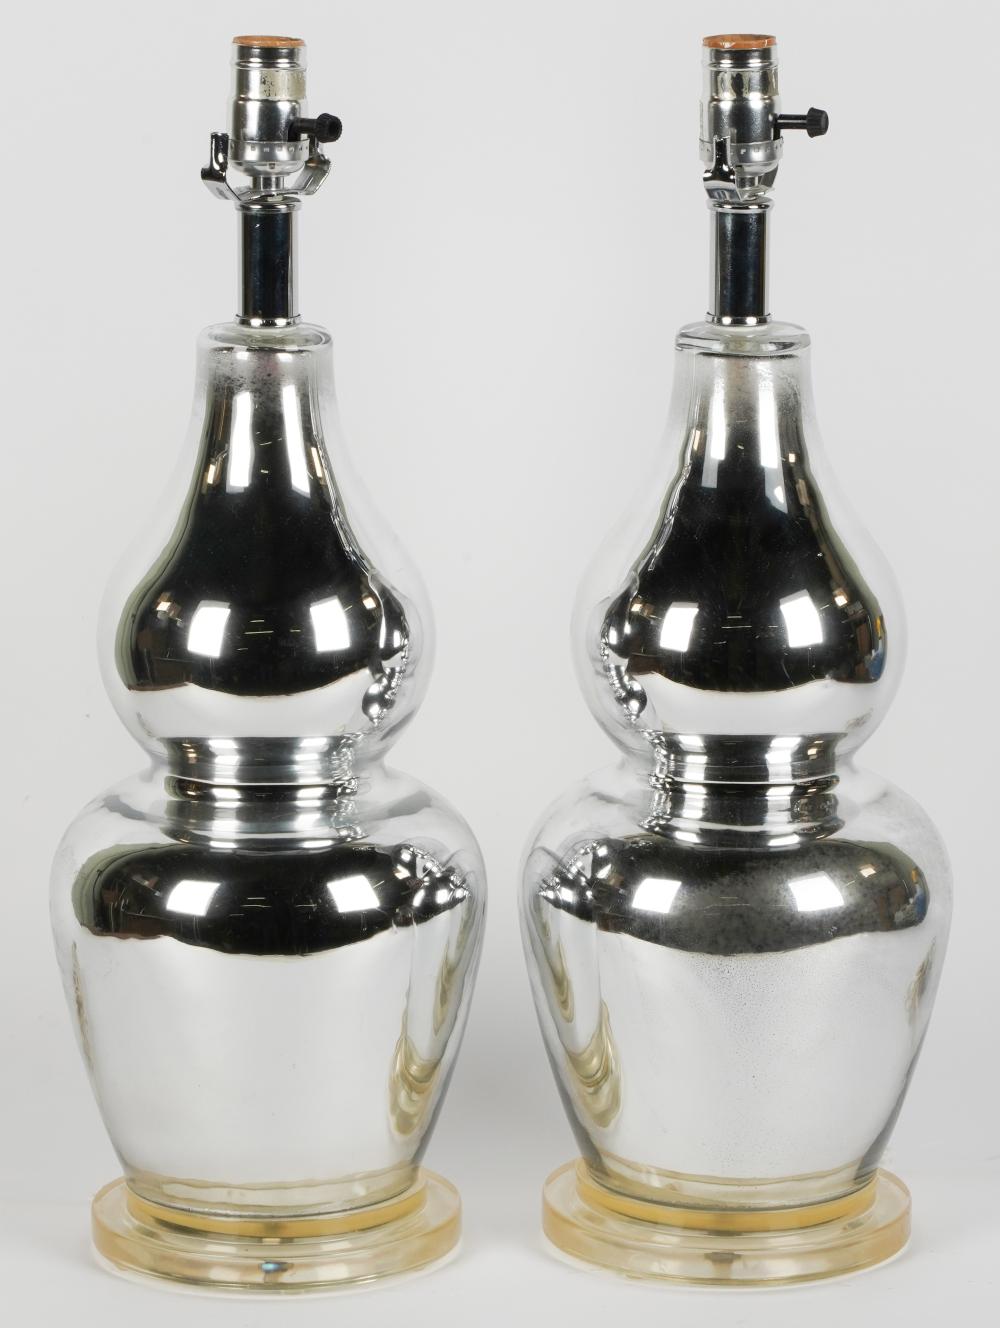 PAIR OF MERCURY GLASS TABLE LAMPSPair